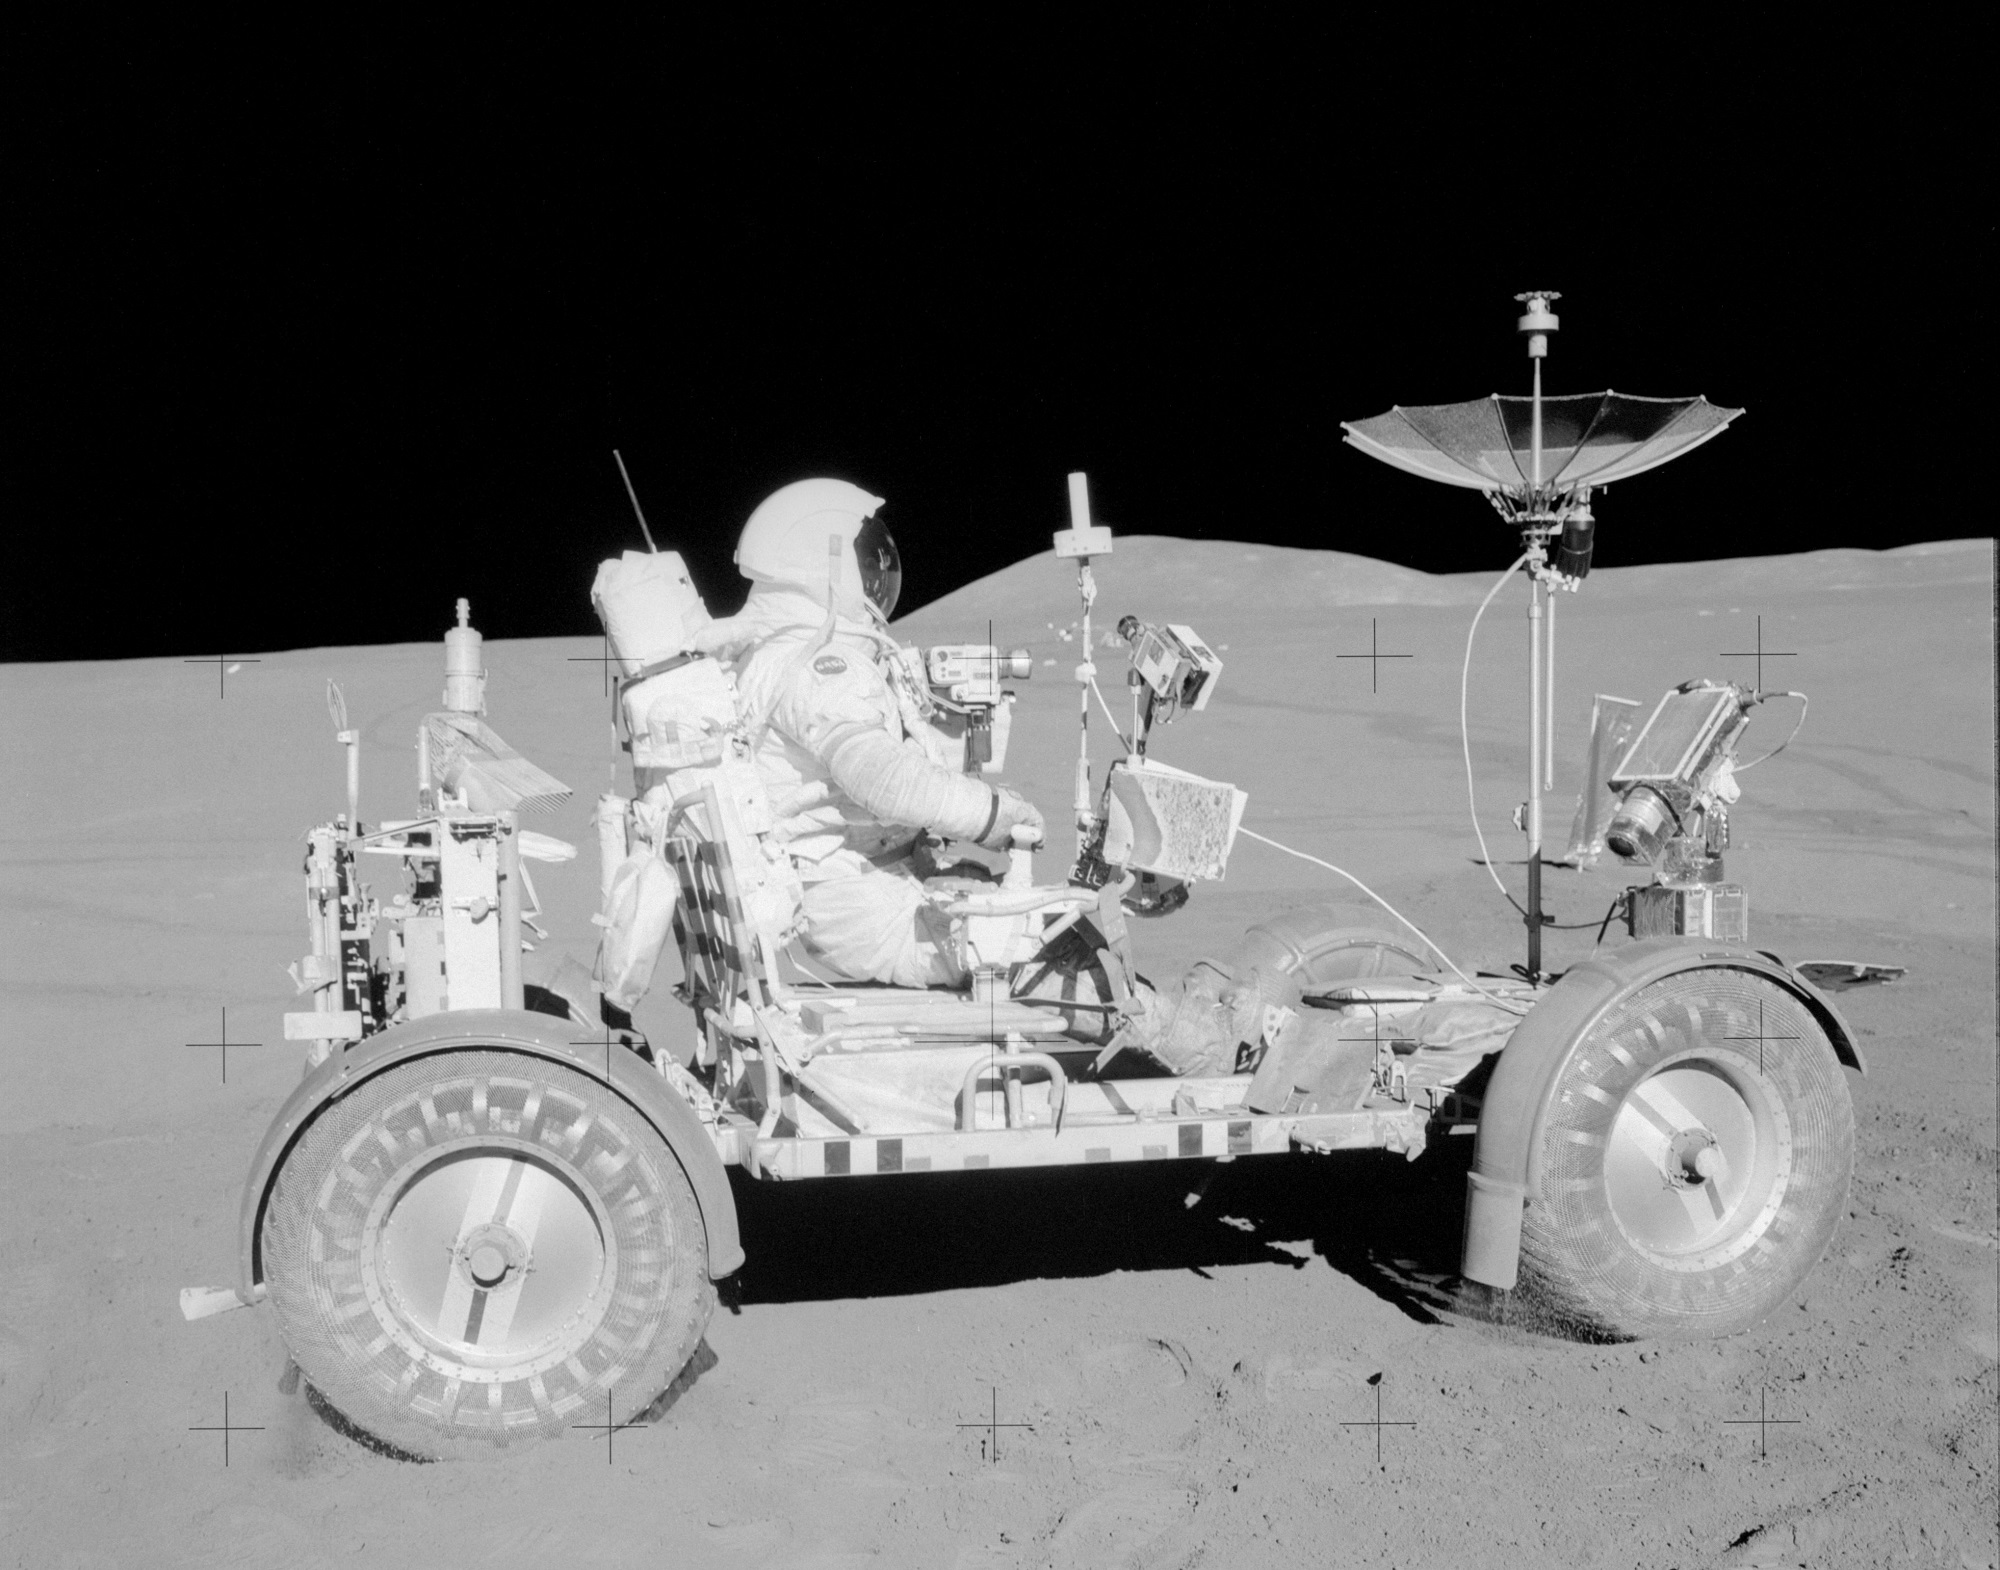 Apollo 15 astronaut on lunar rover in black and white NASA image